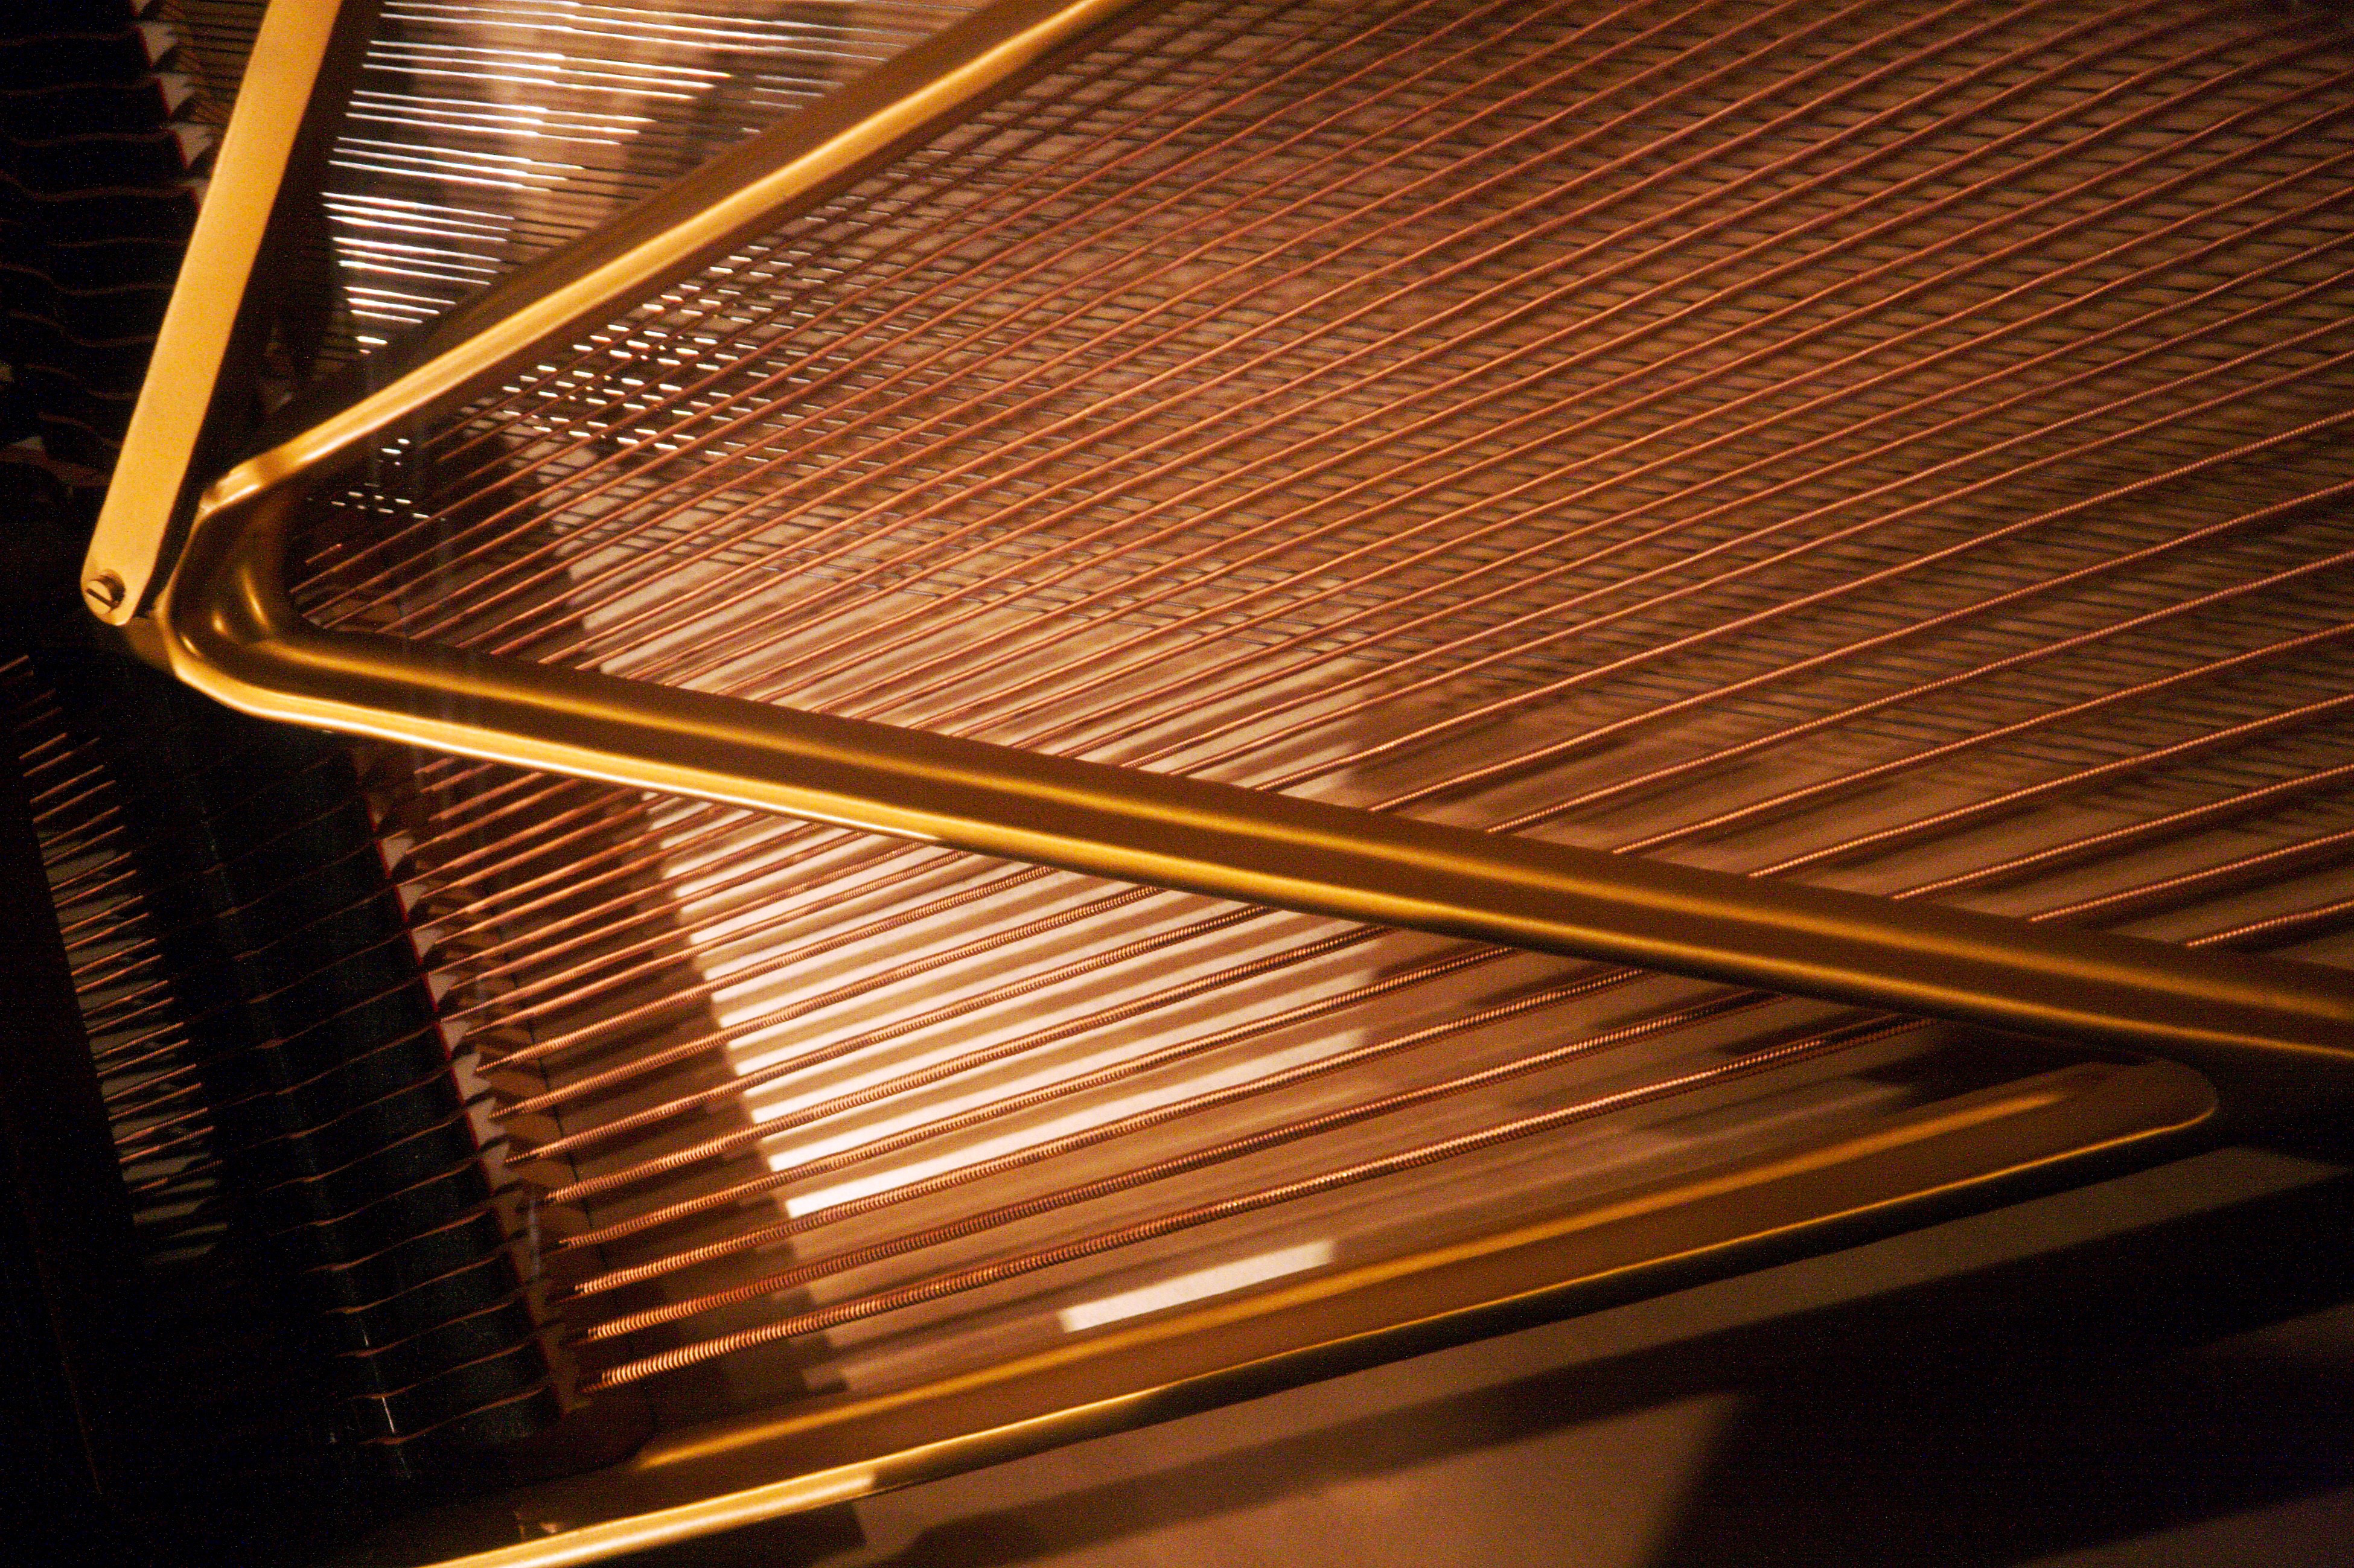 Piano strings 5